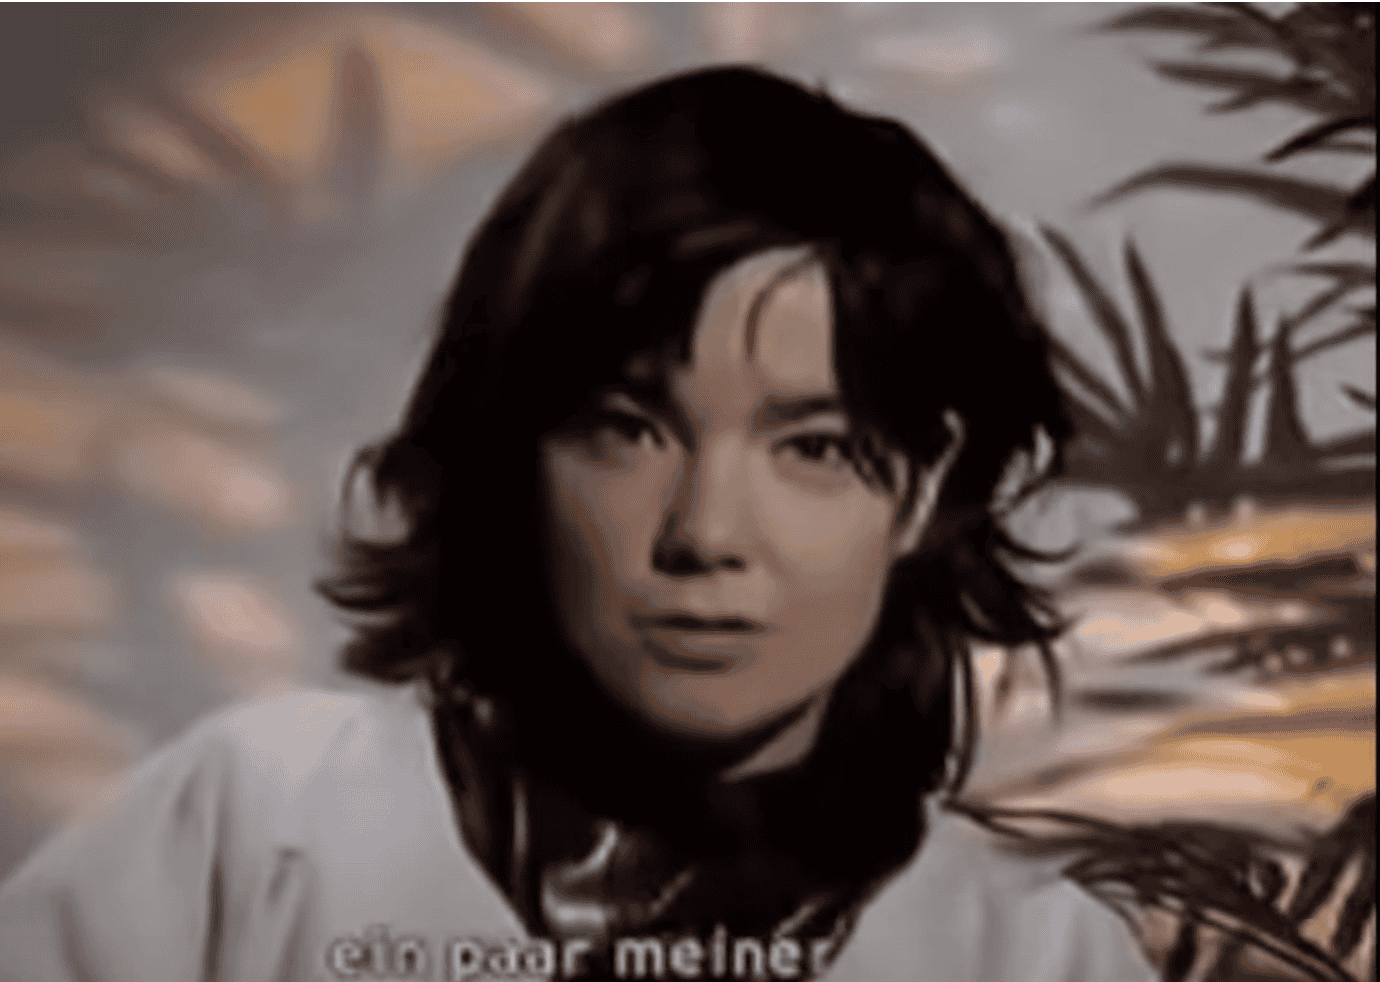 Björk on Aphex twin